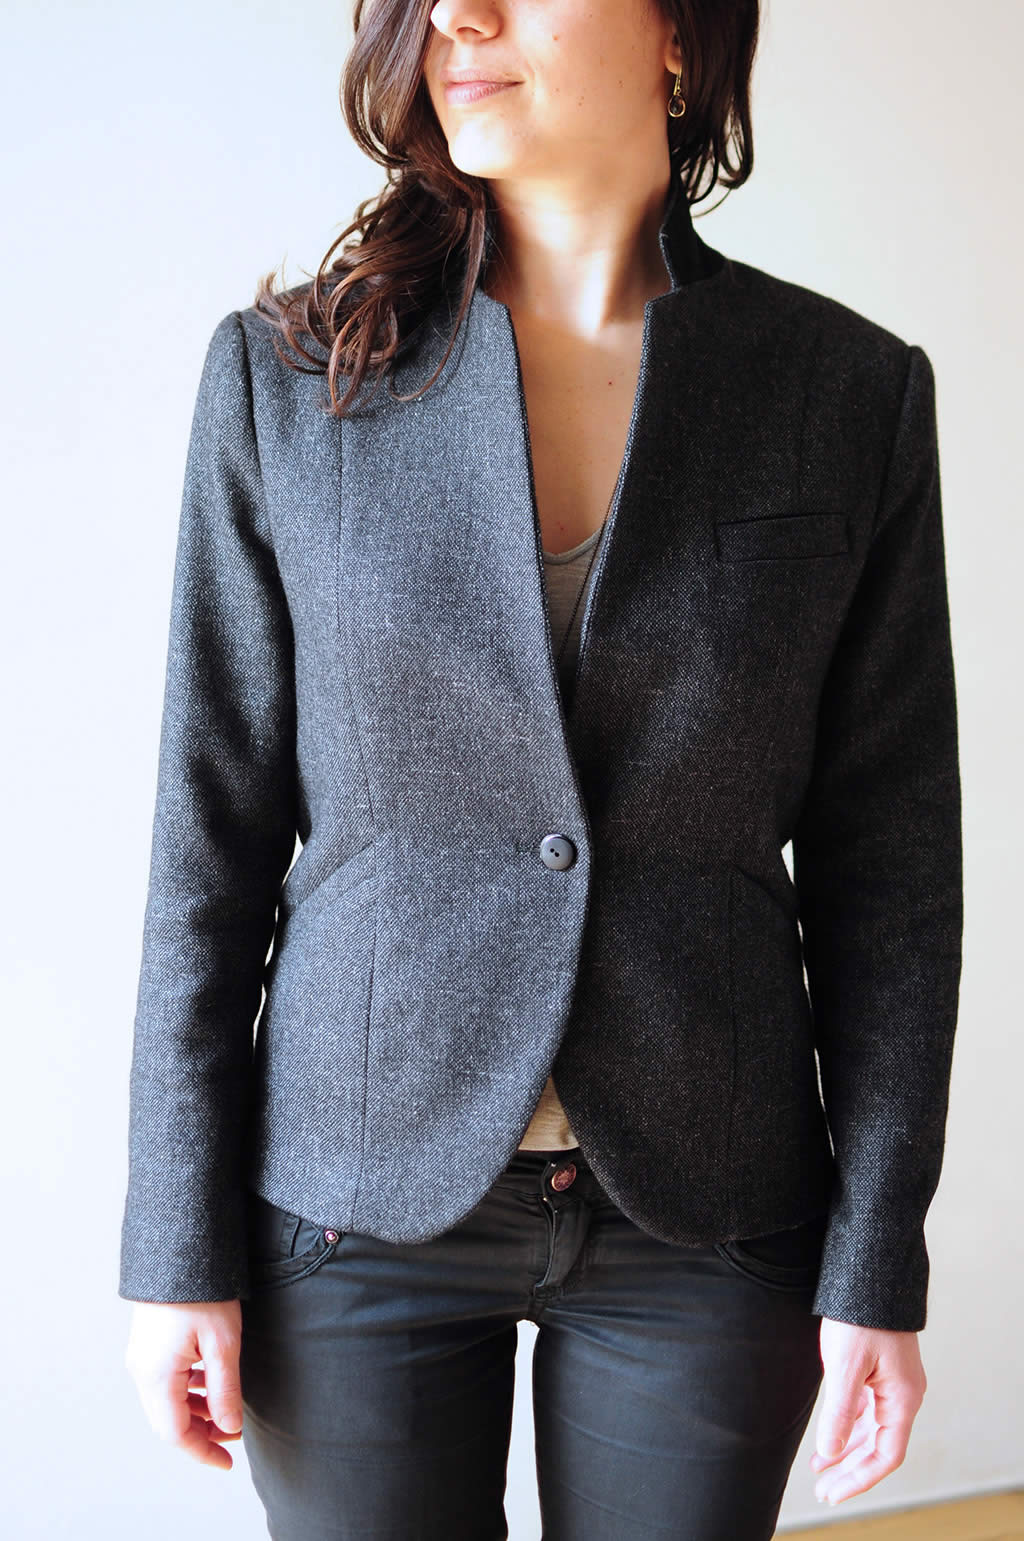 ladulsatina - Sewing blog - Self-drafted blazer - front